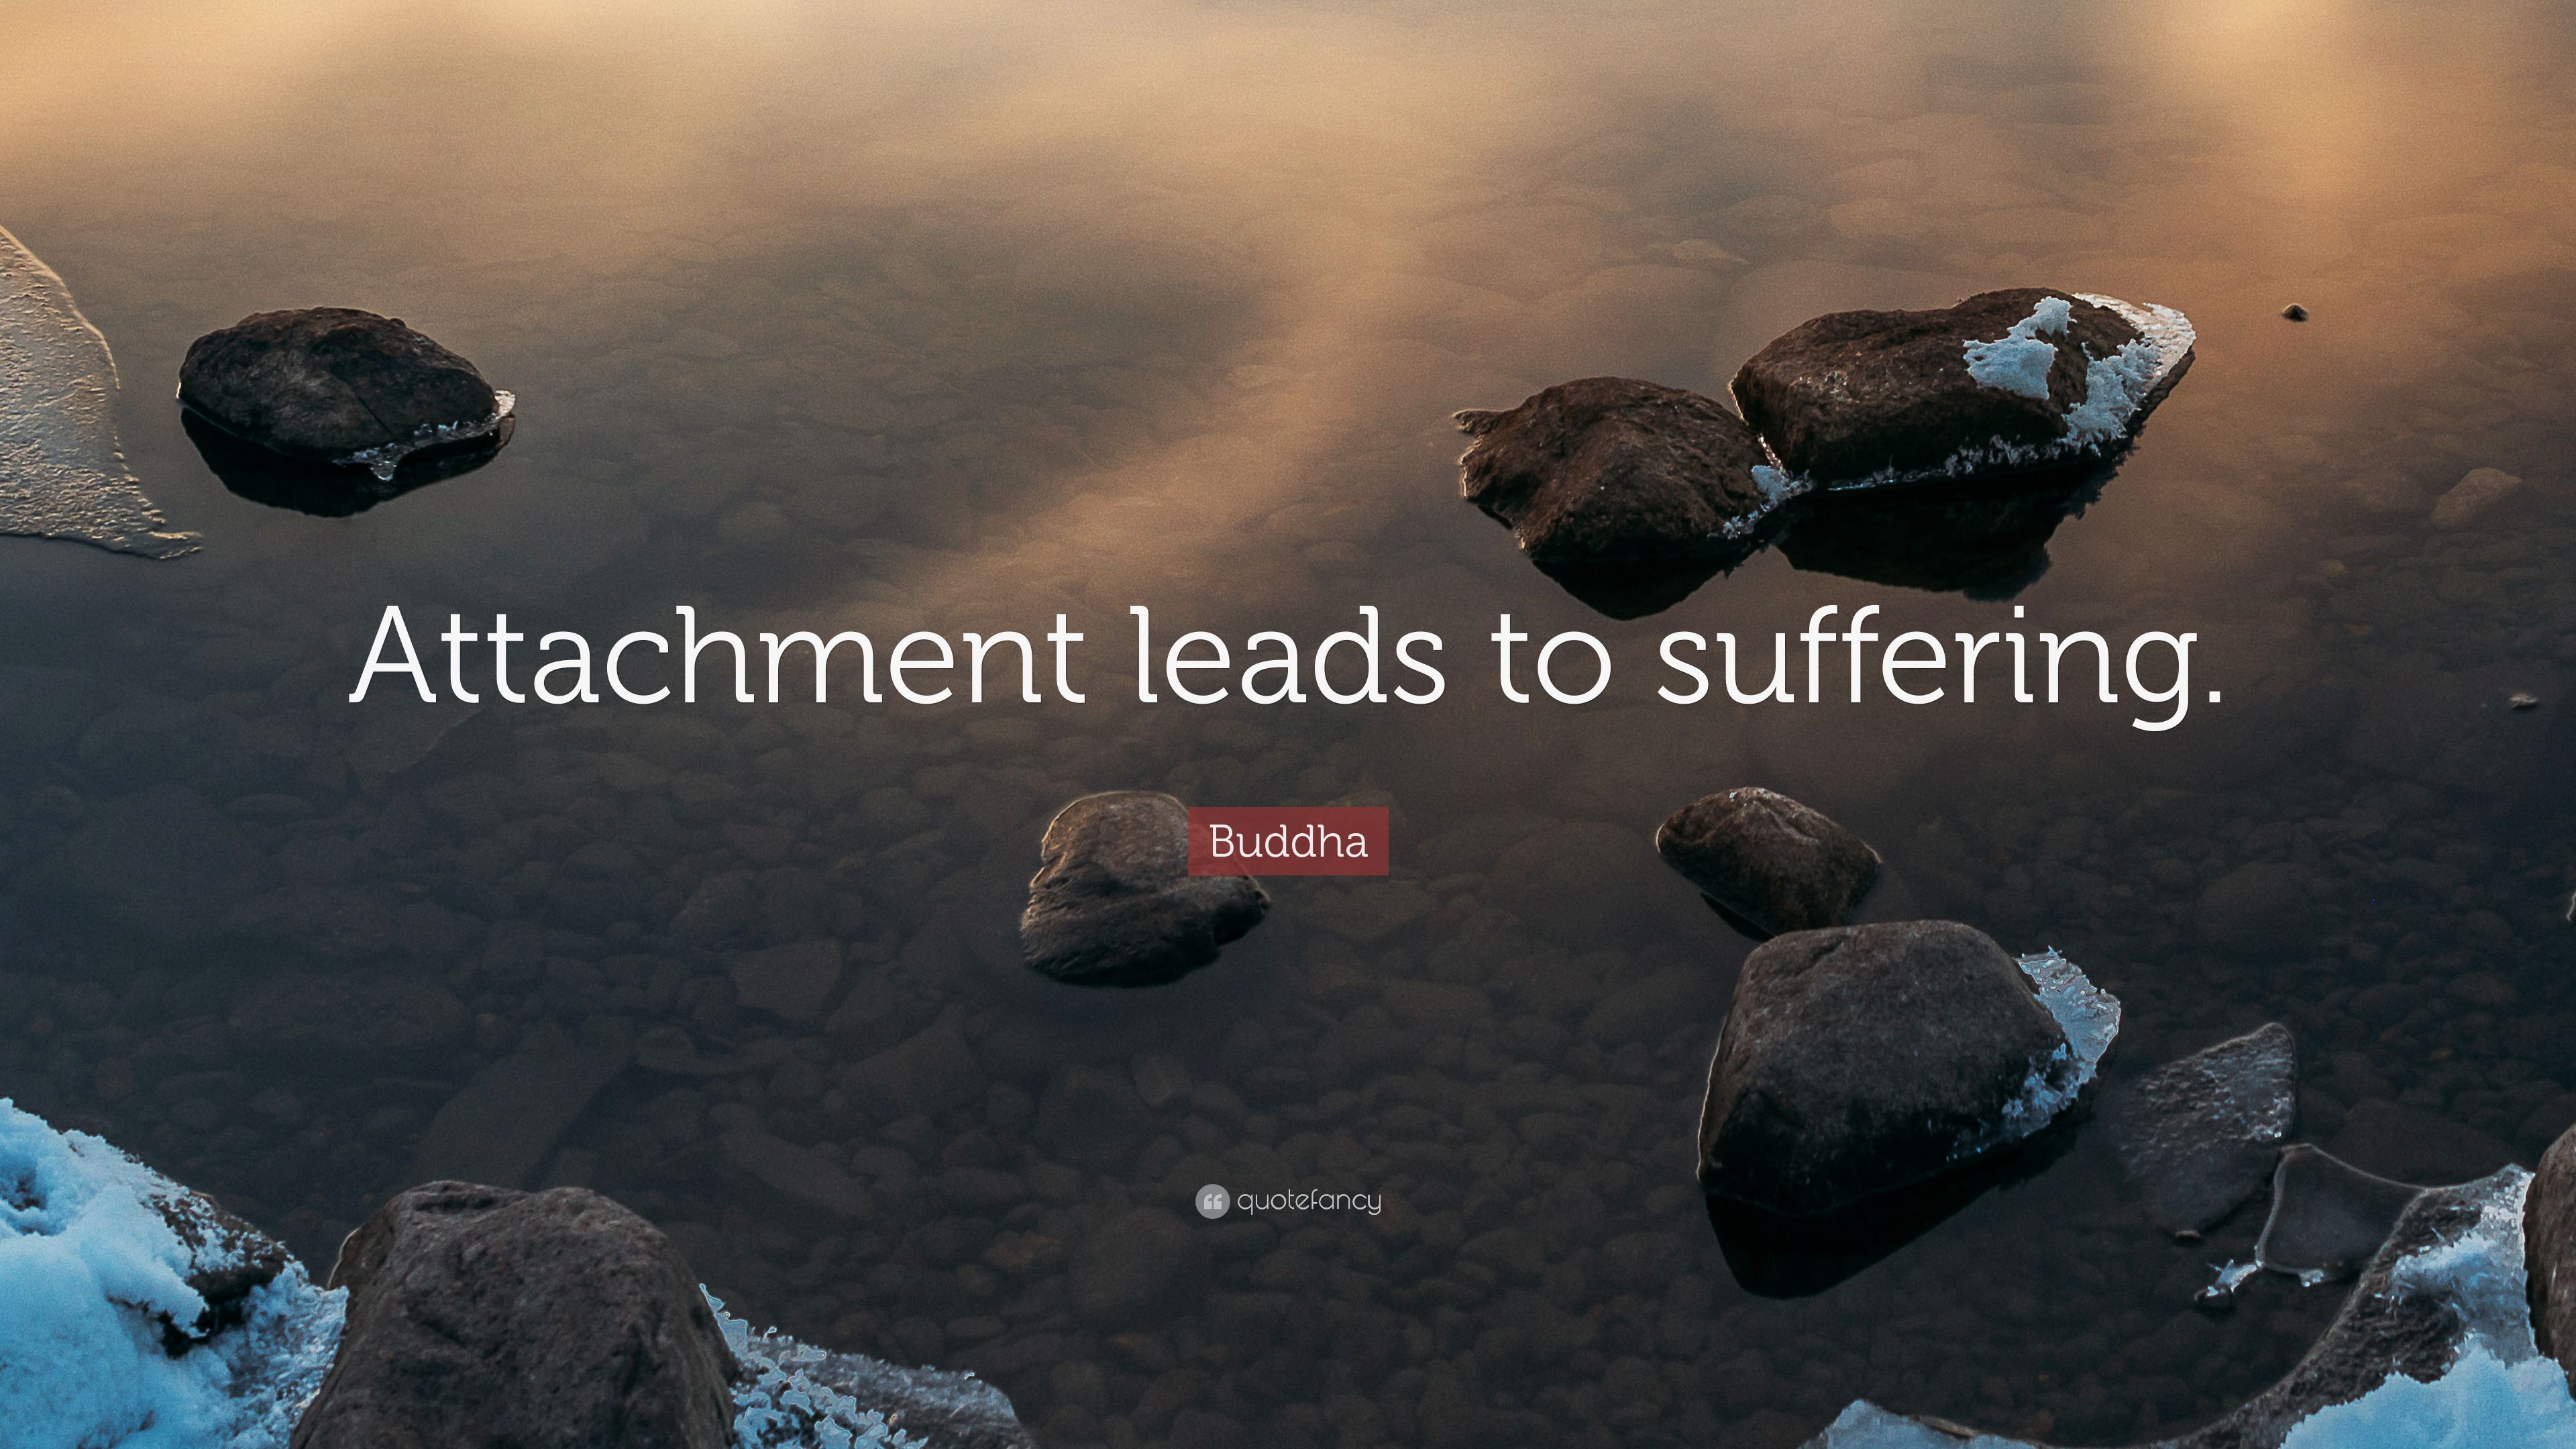 Buddha Quote: “Attachment leads to suffering.” 17 wallpaper